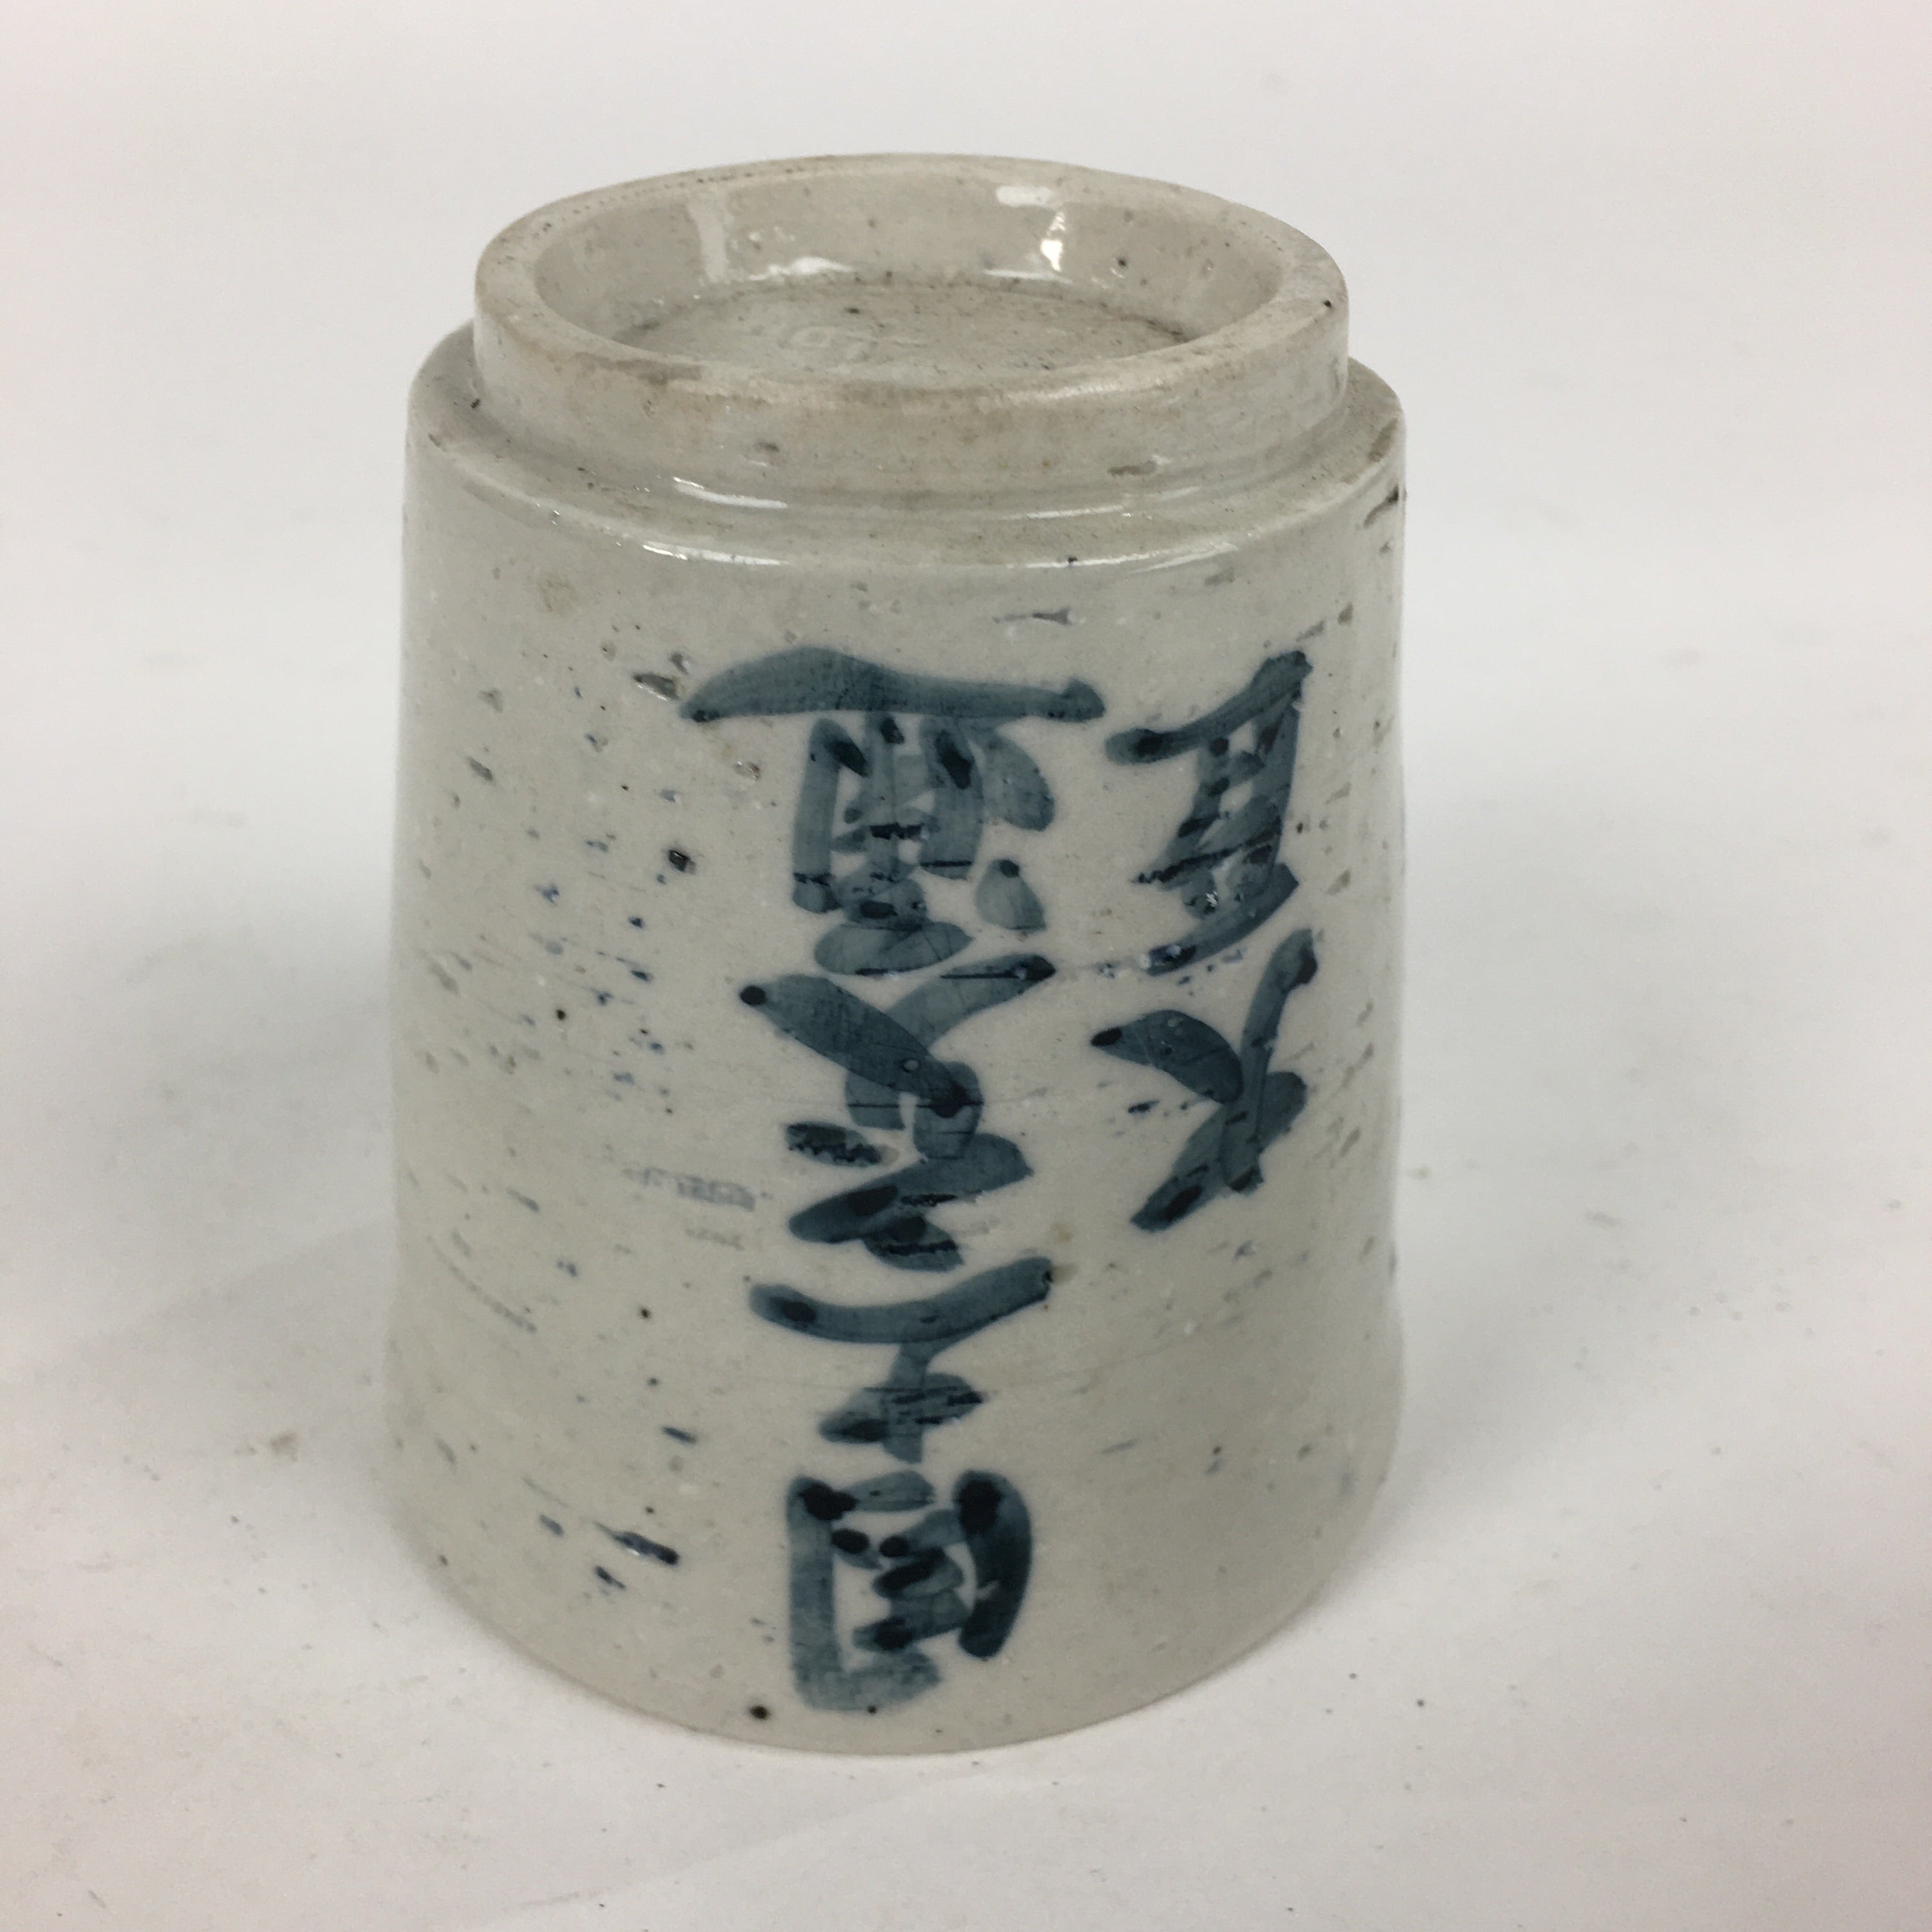 Japanese Ceramic Large Teacup Yunomi Vtg Pottery White Blue Sencha PP890